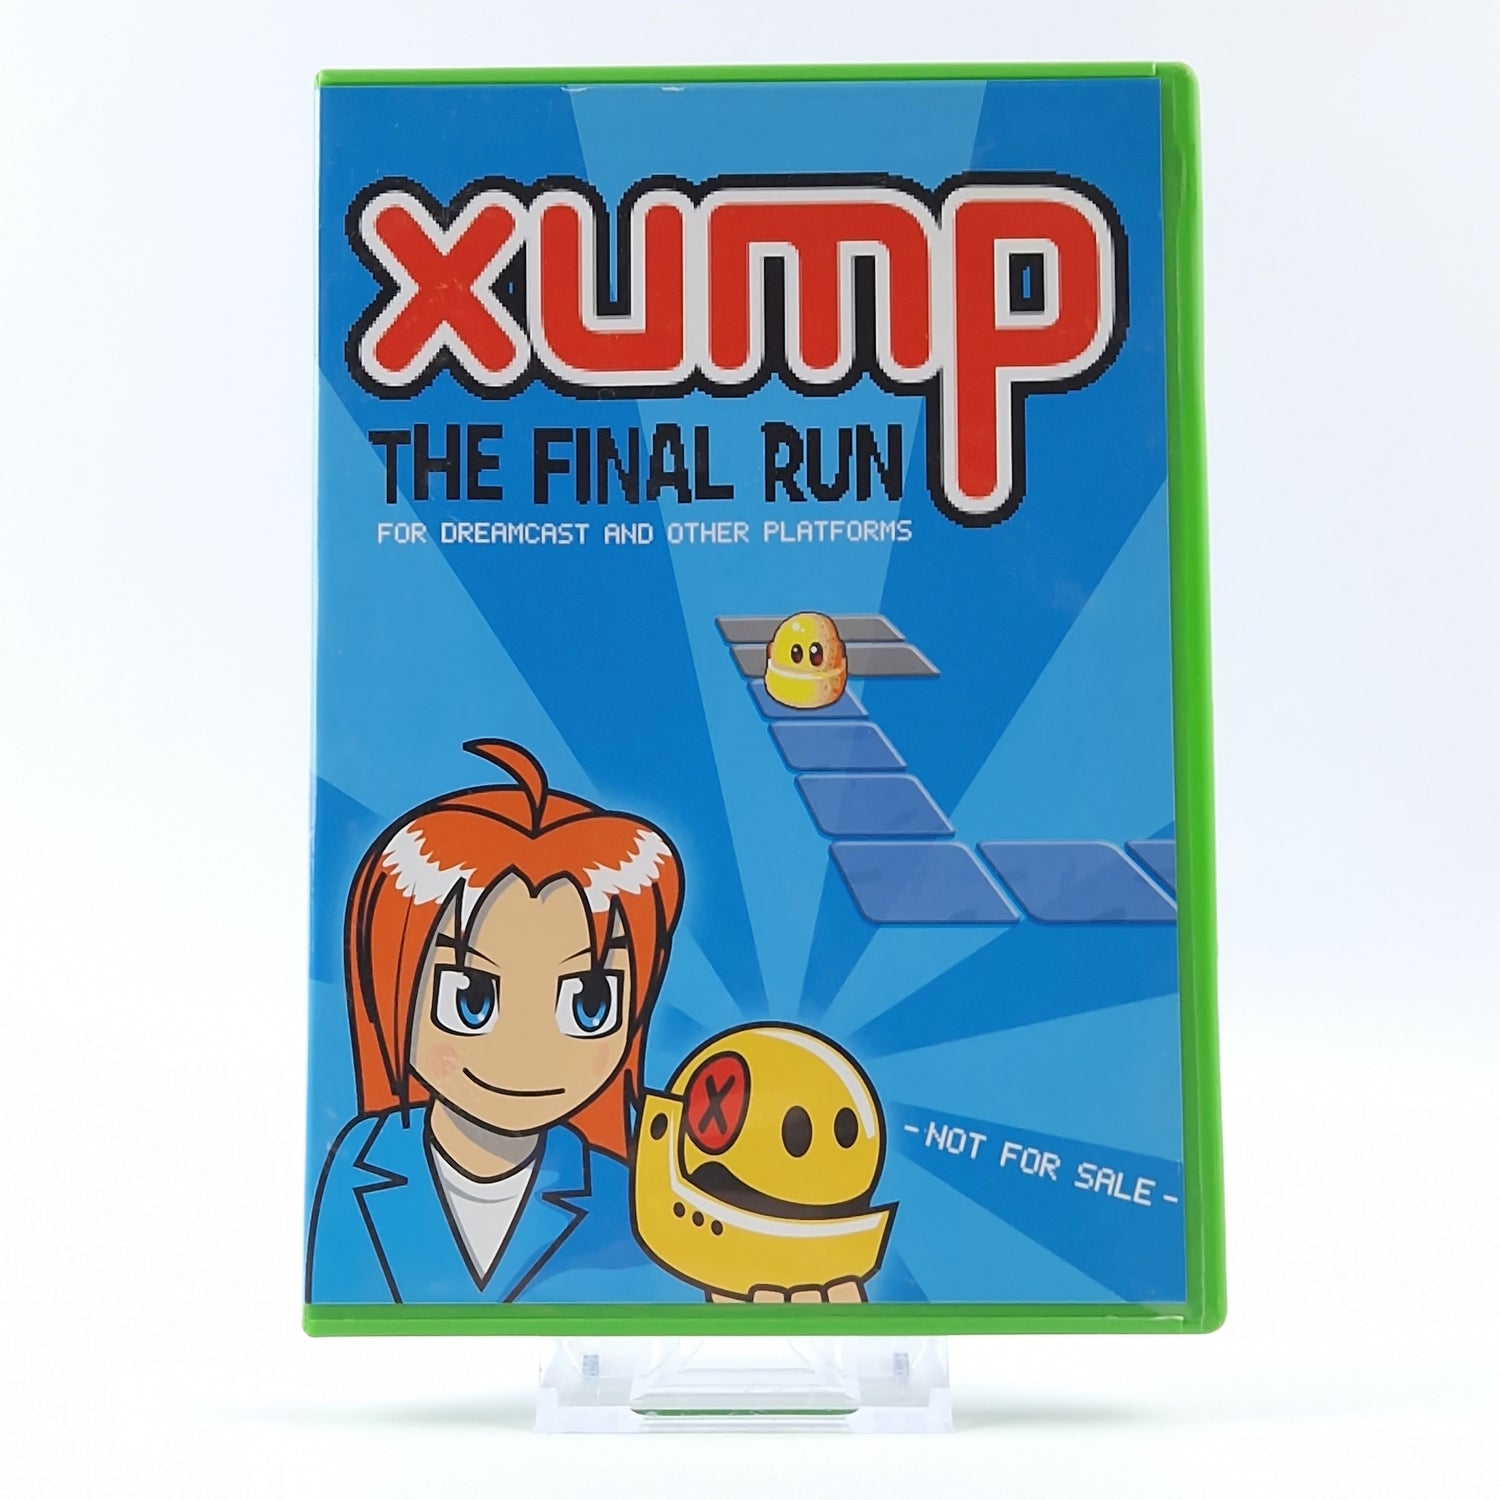 Sega Dreamcast Game: Xump The Final Run - OVP CD PAL Game - Not for Resale